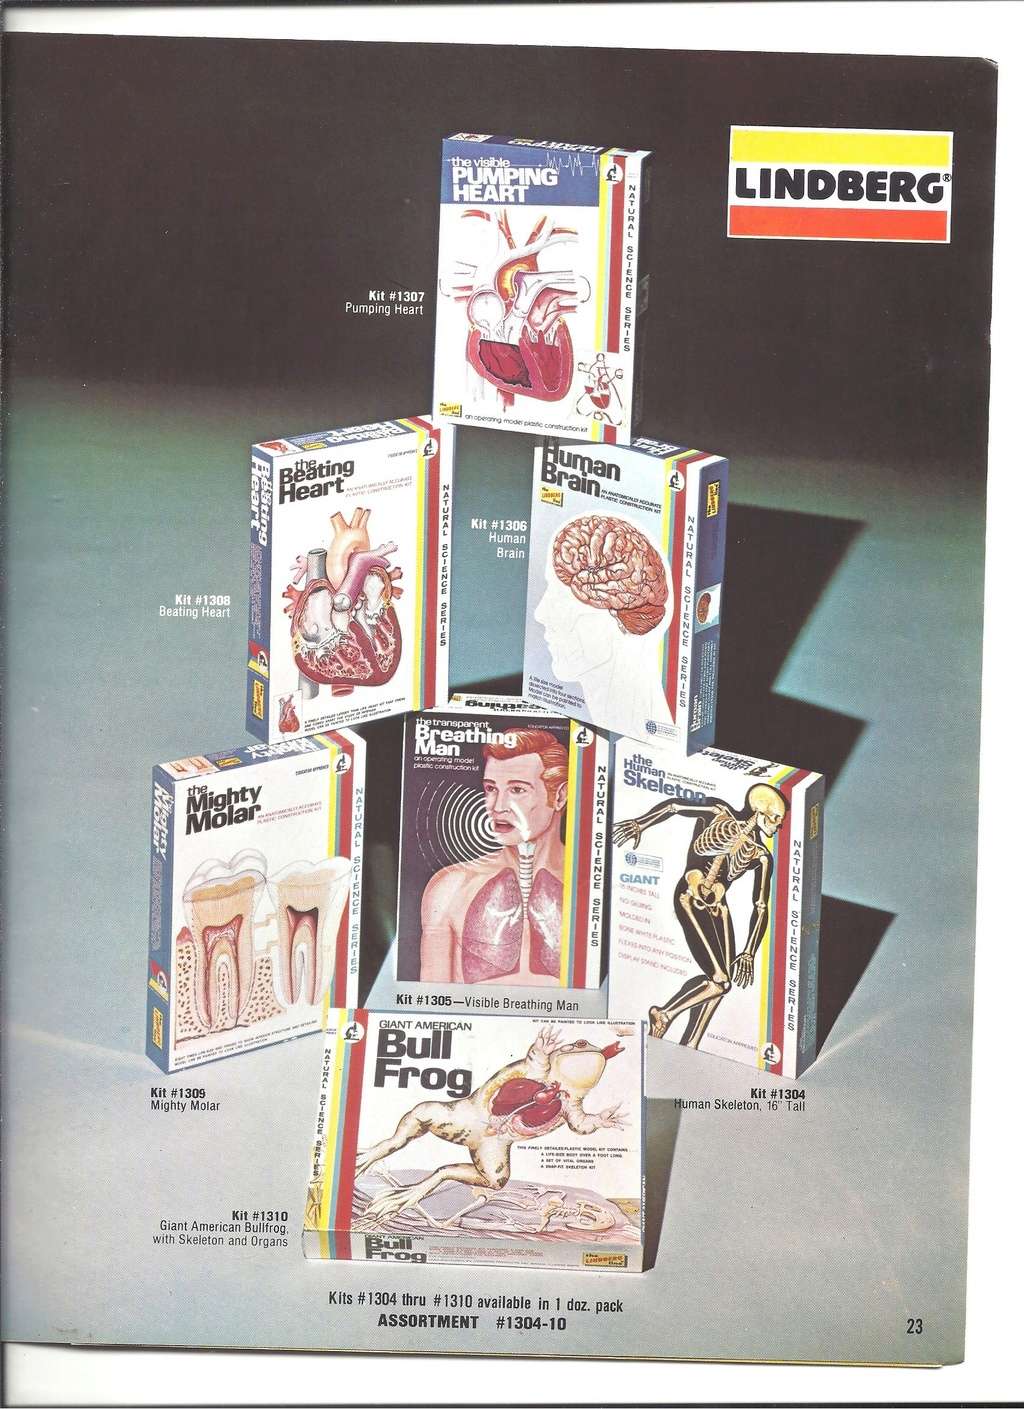 [LINDBERG 1979] Catalogue 1979 Lindb245